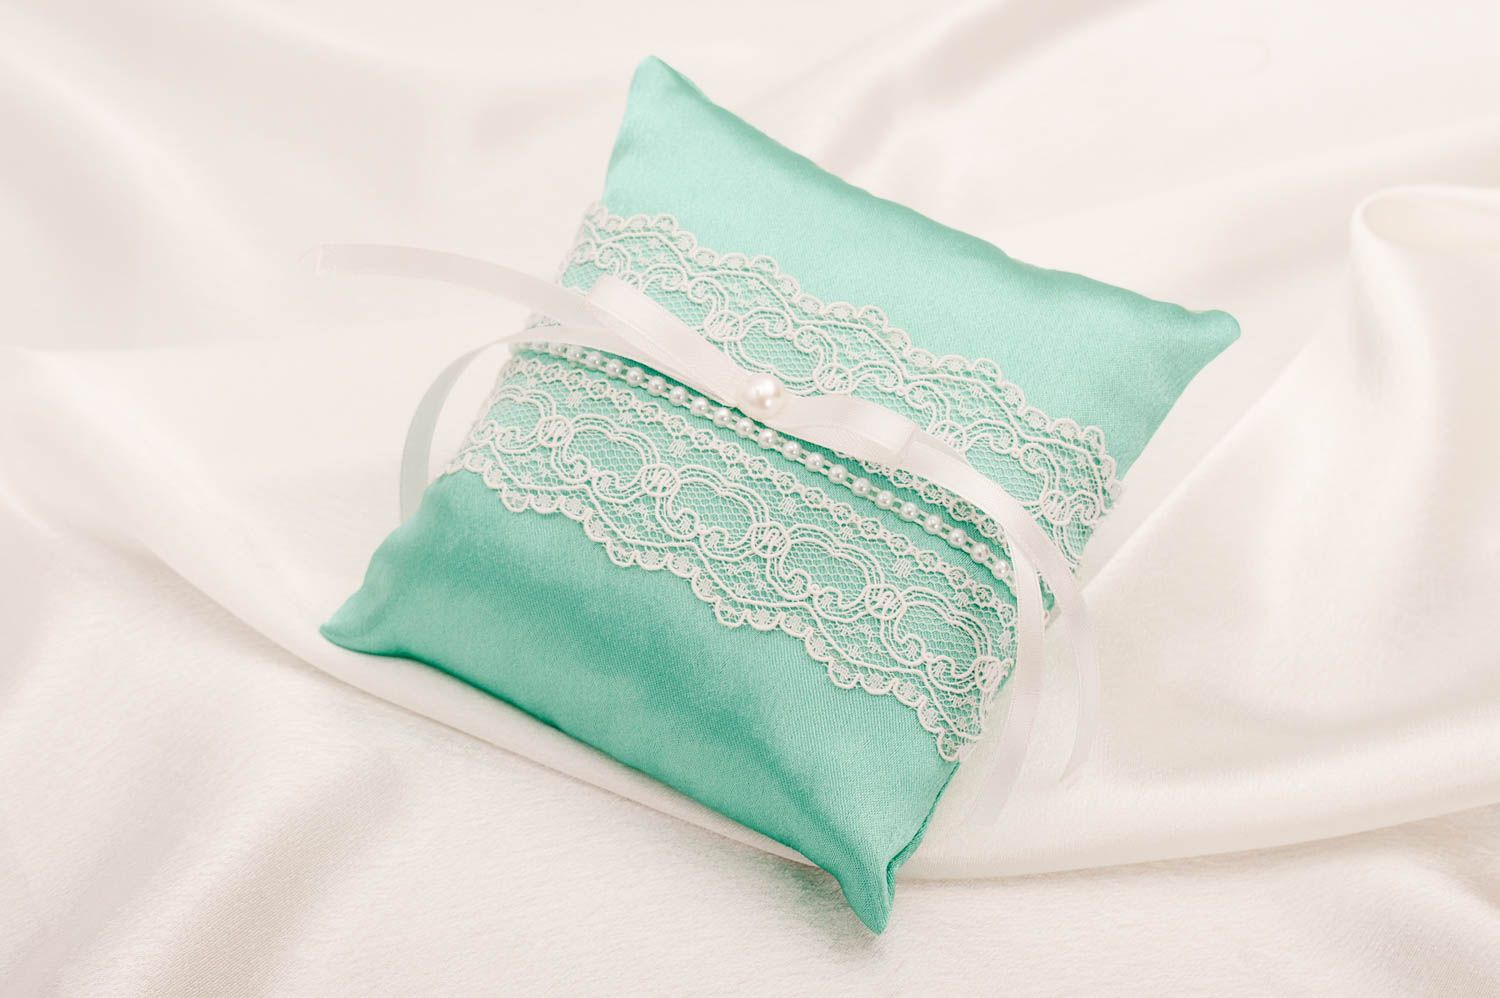 Handmade pillow designer pillow for rings wedding accessories decor ideas photo 1